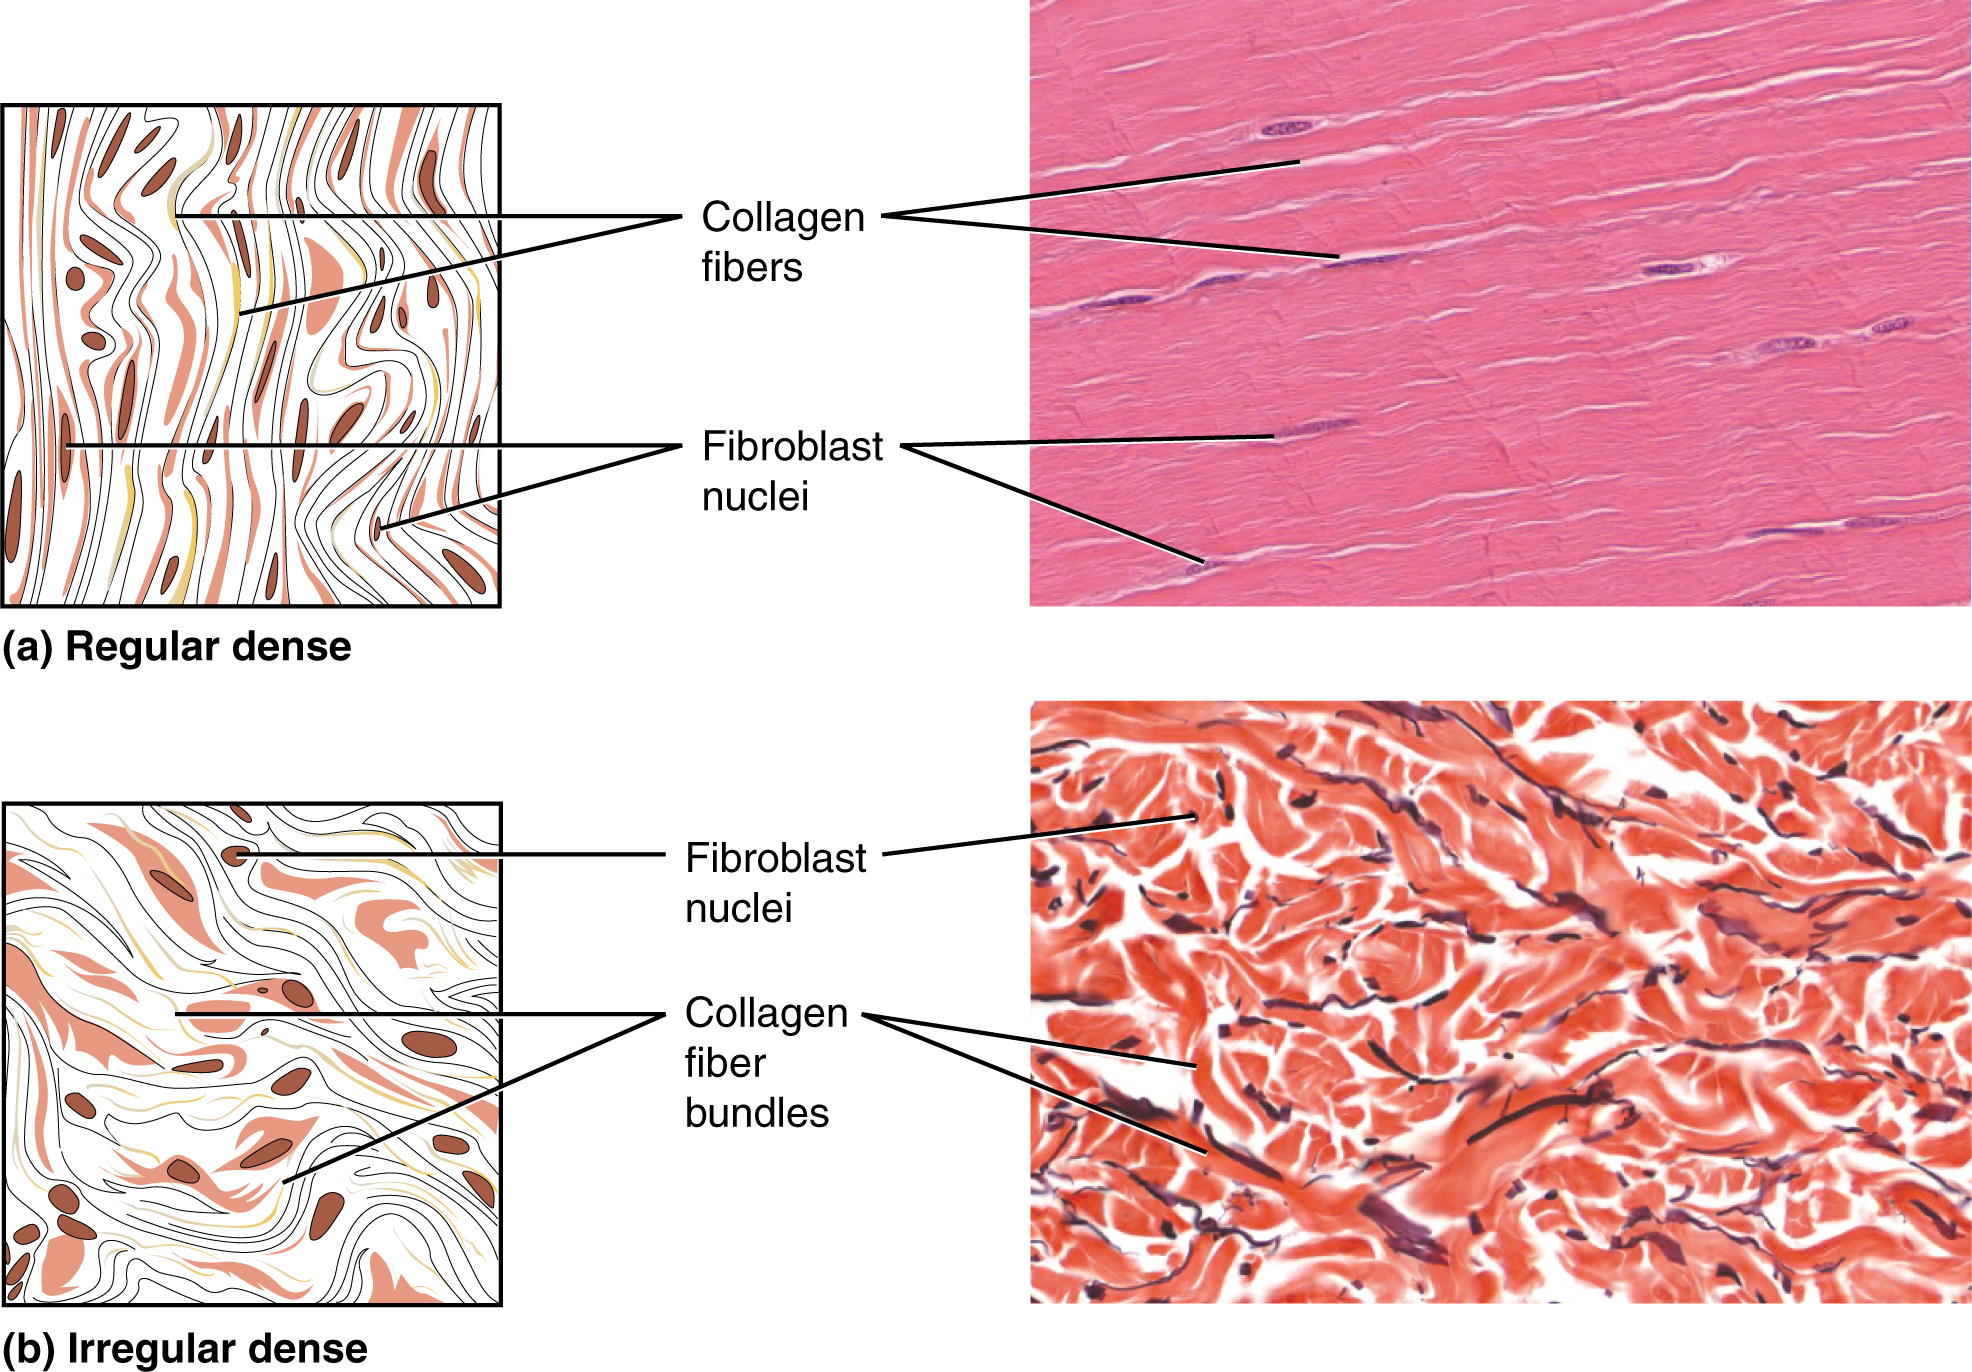 reticular fibers labeled